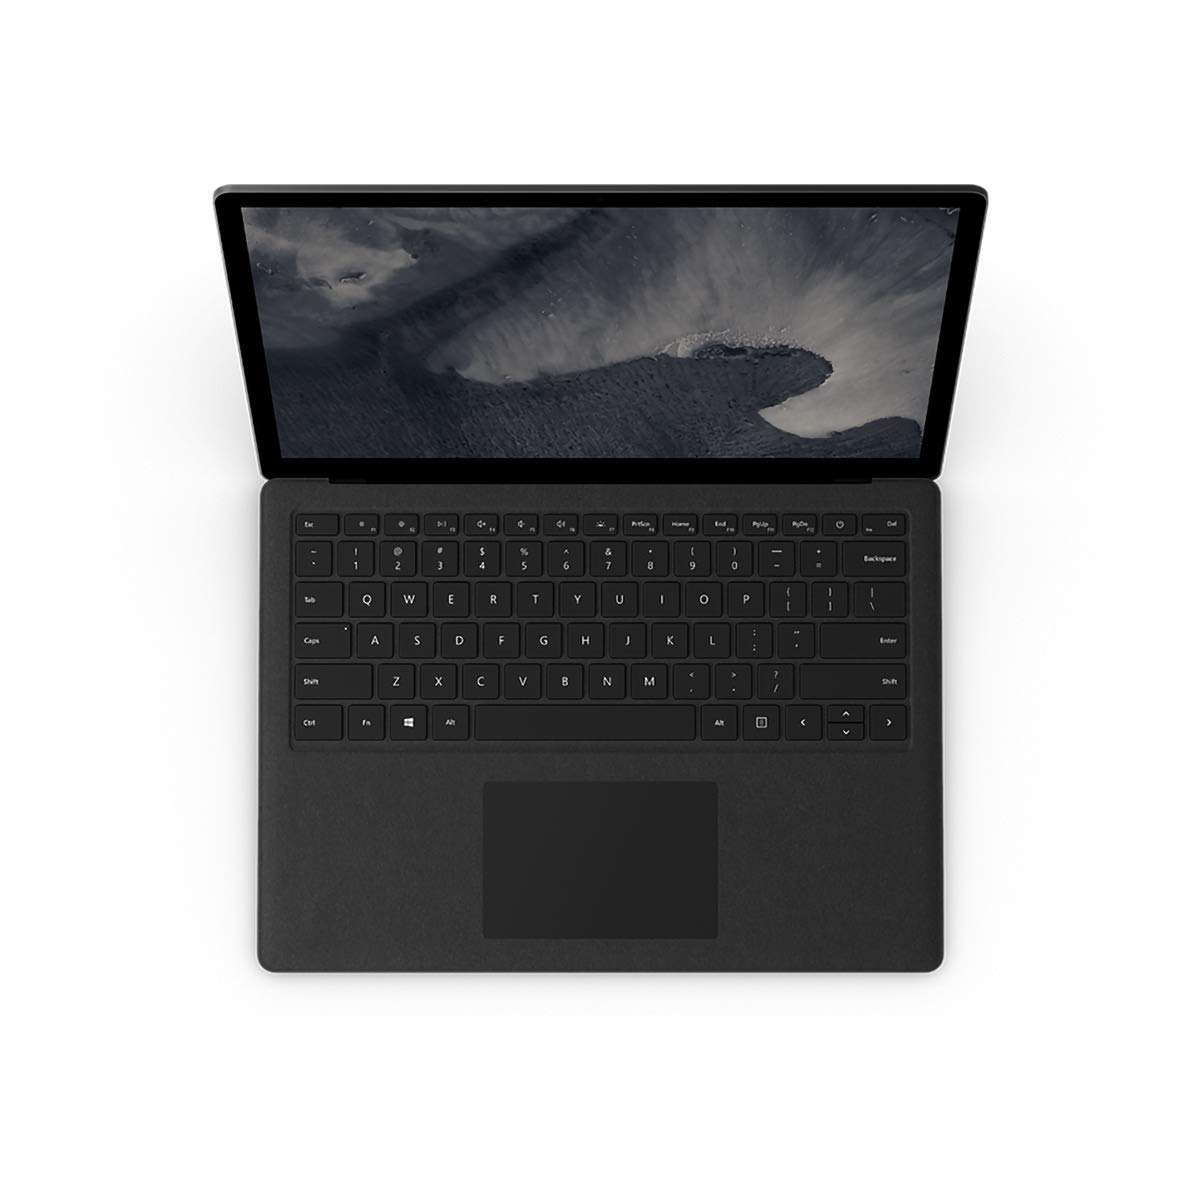 Microsoft Surface Laptop 2 (Intel Core i7, 8GB RAM, 256GB) - Cobalt (Newest Version)